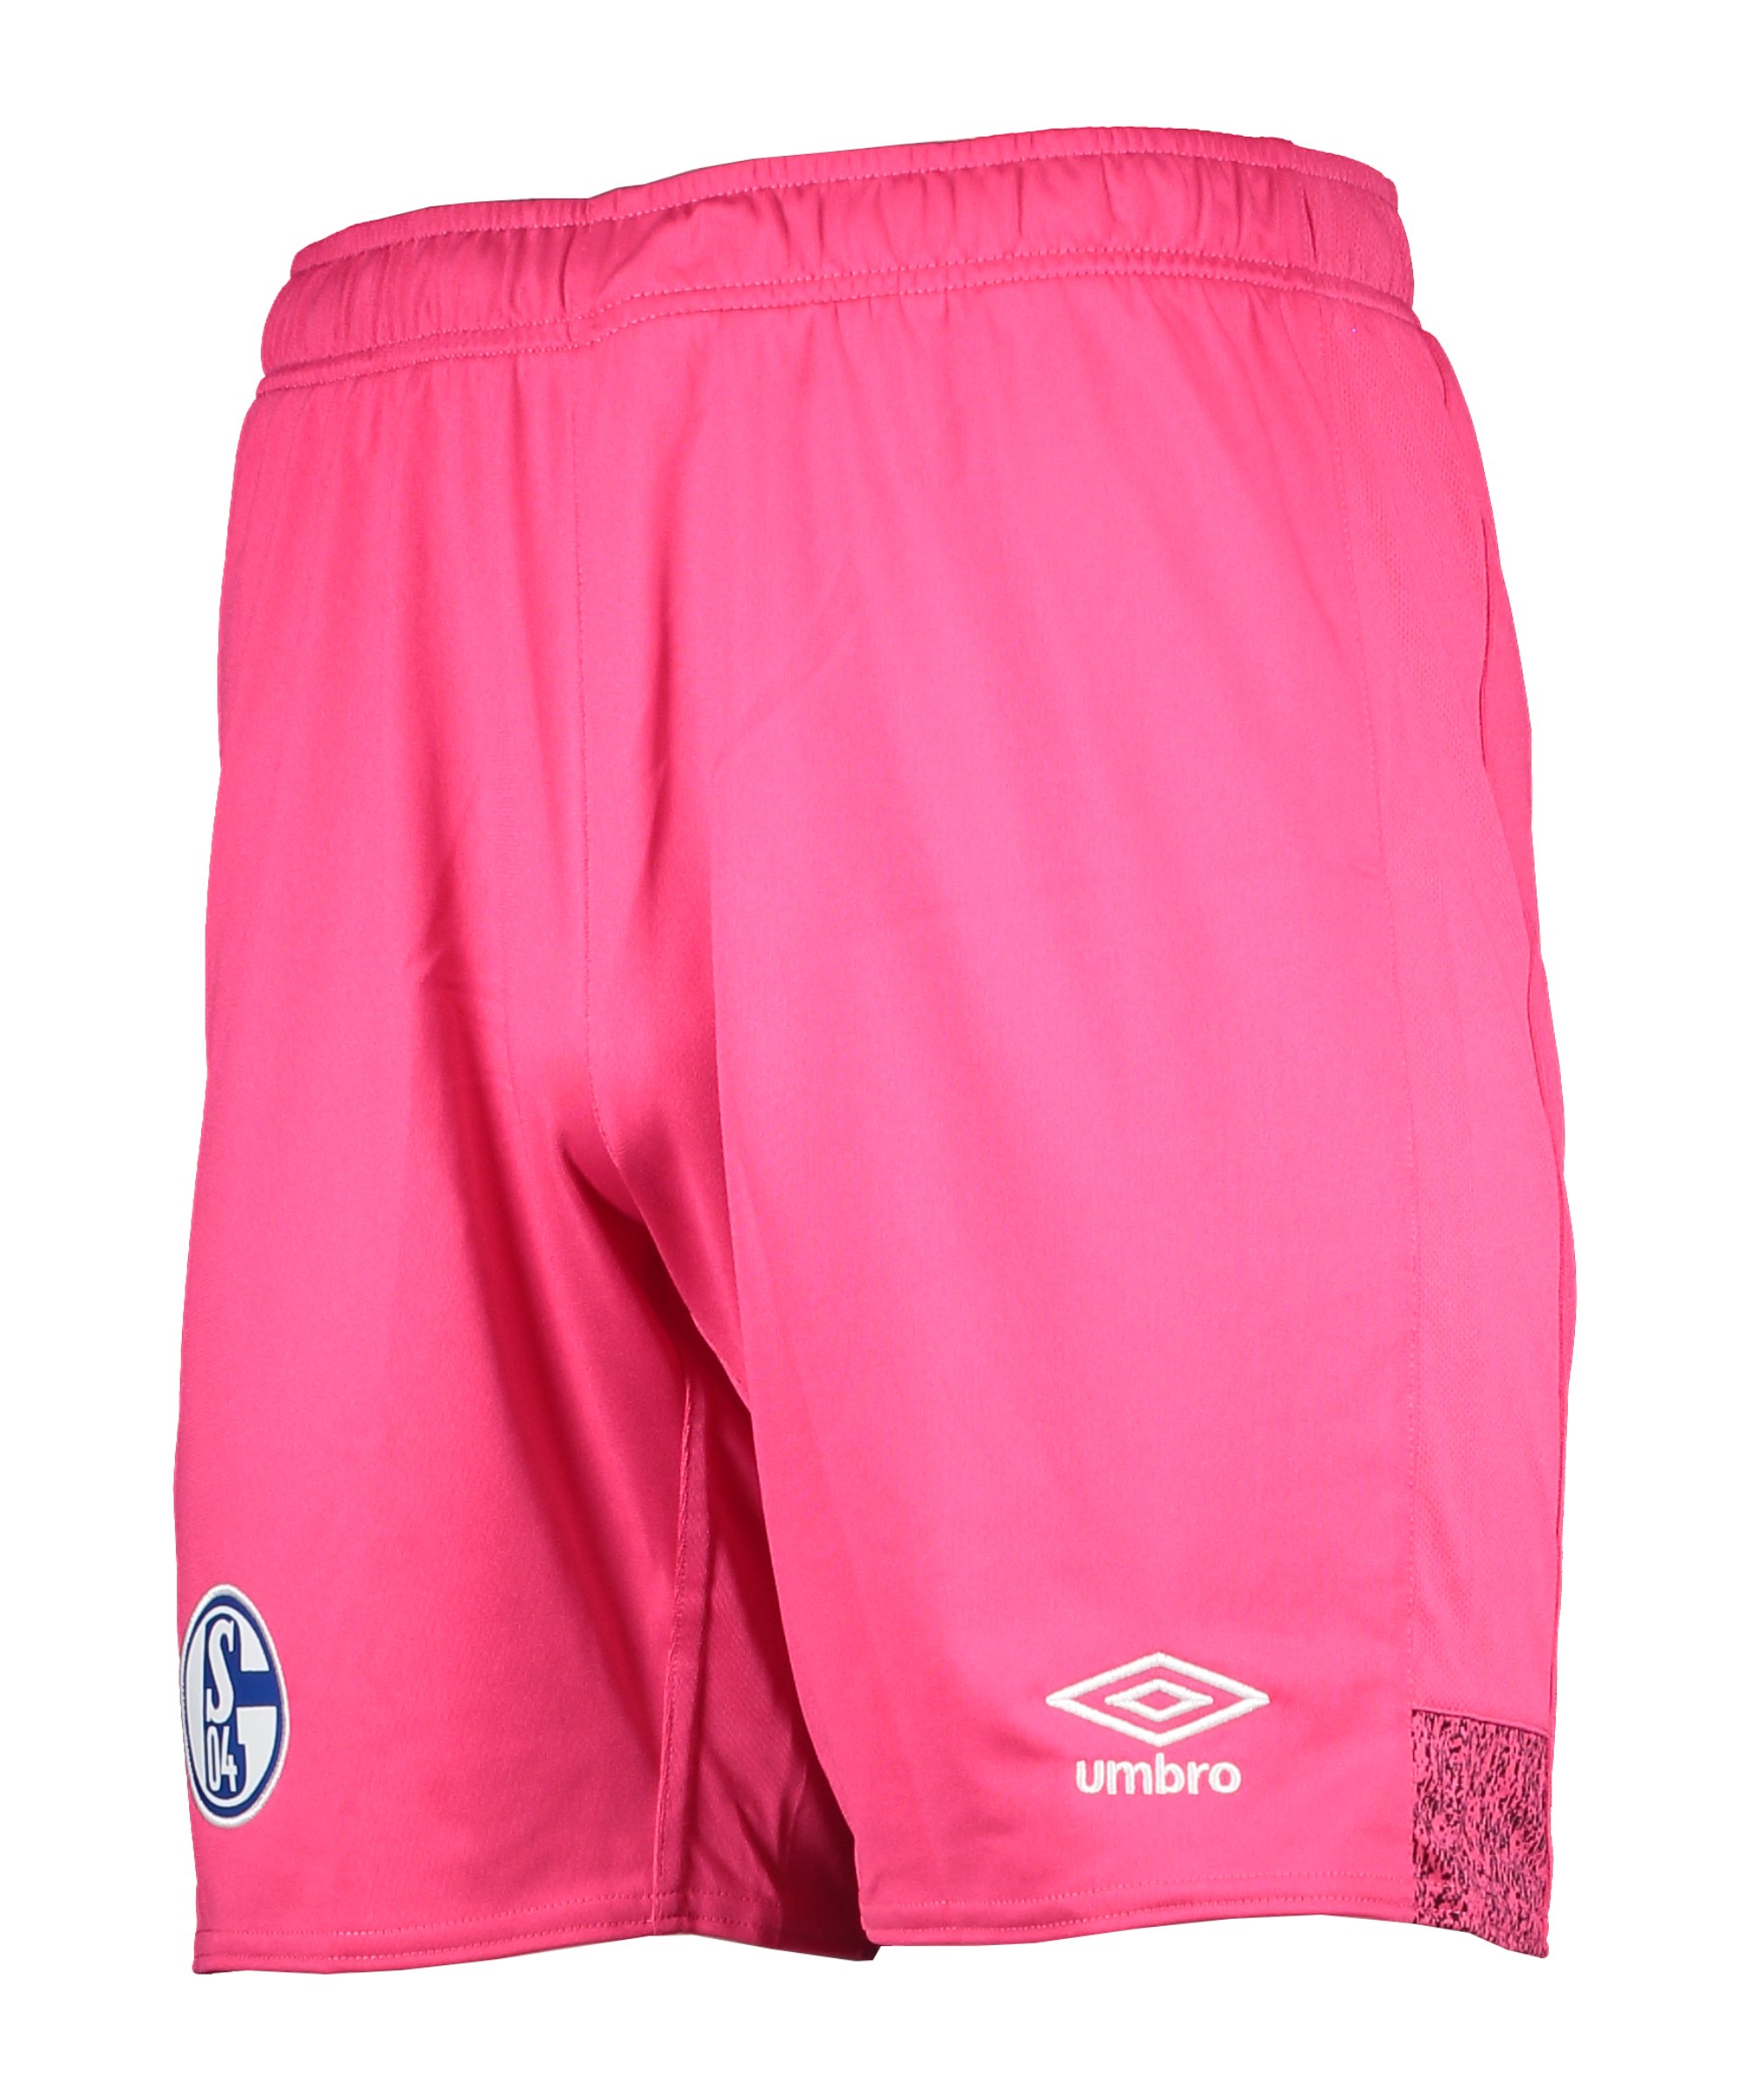 Umbro FC Schalke 04 Torwart Short Home Kids 2021/2022 - pink